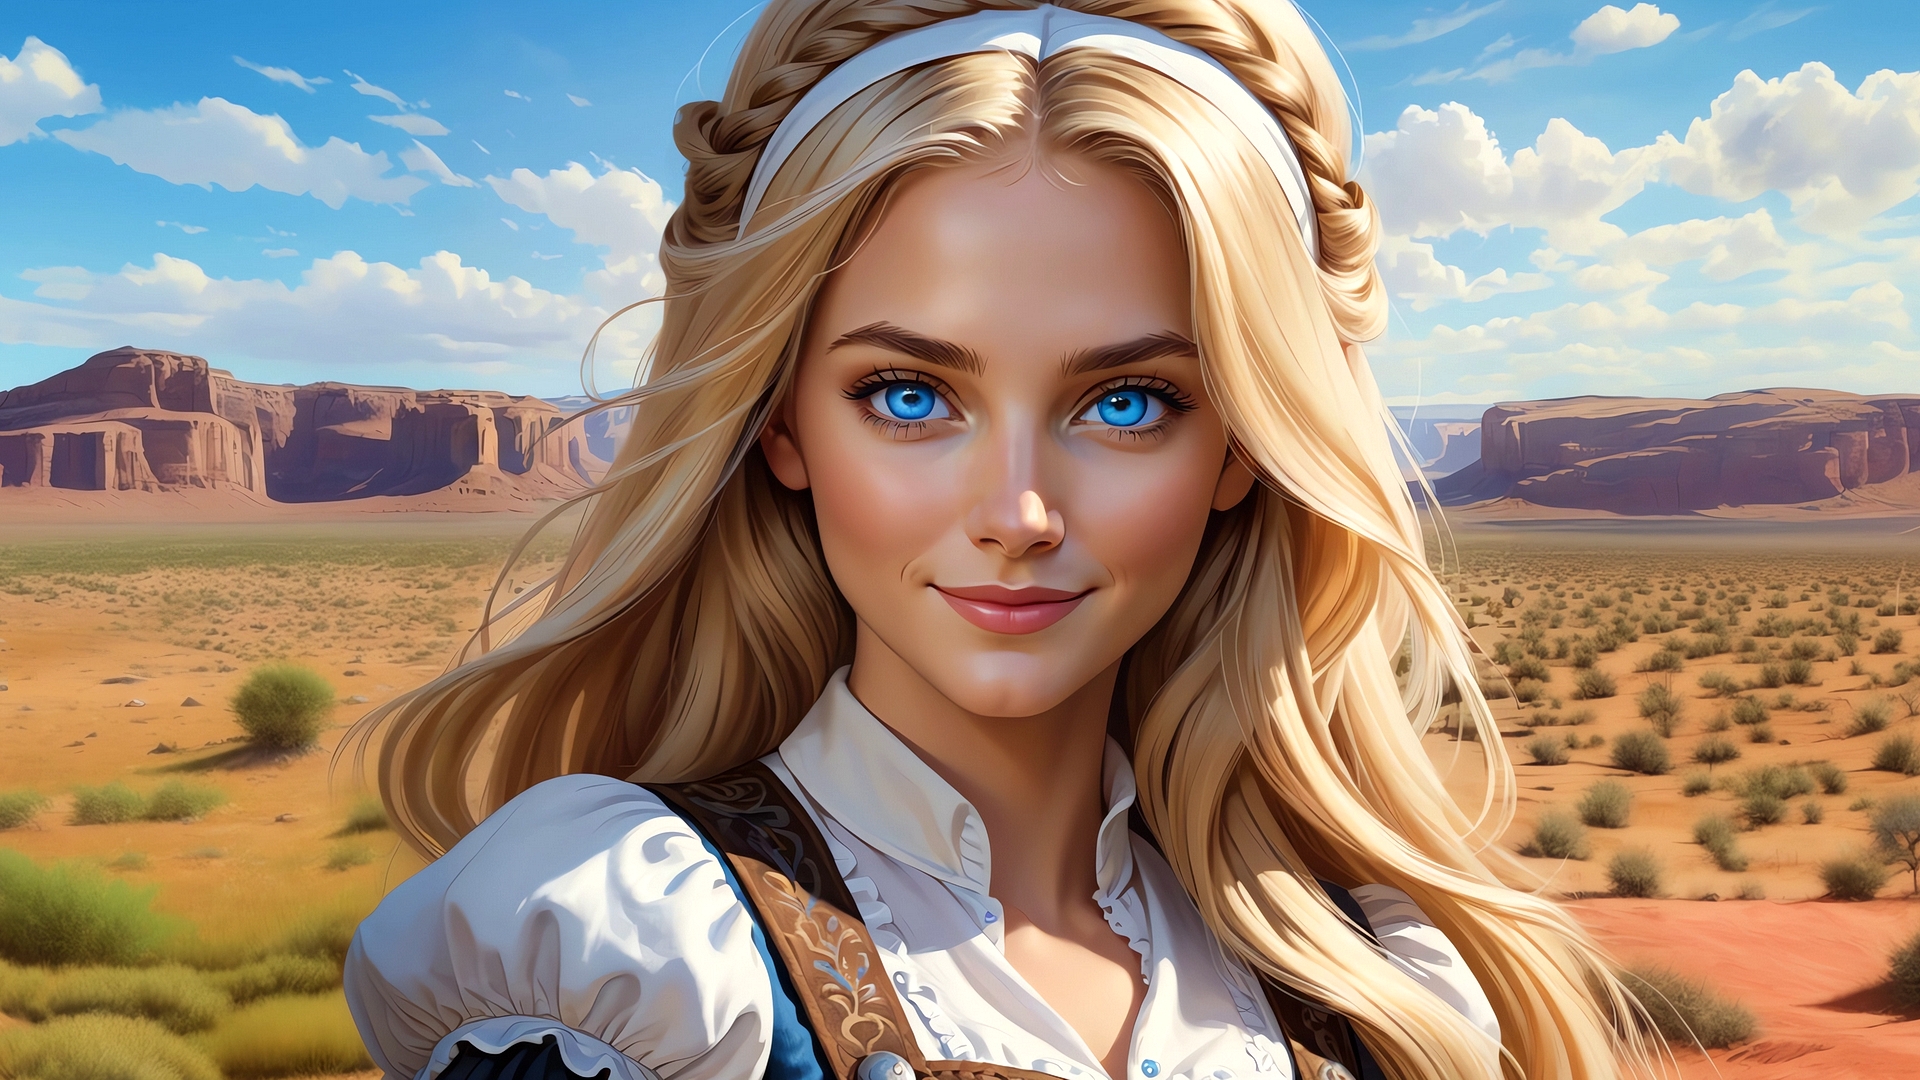 Portrait of a blonde girl against a desert background